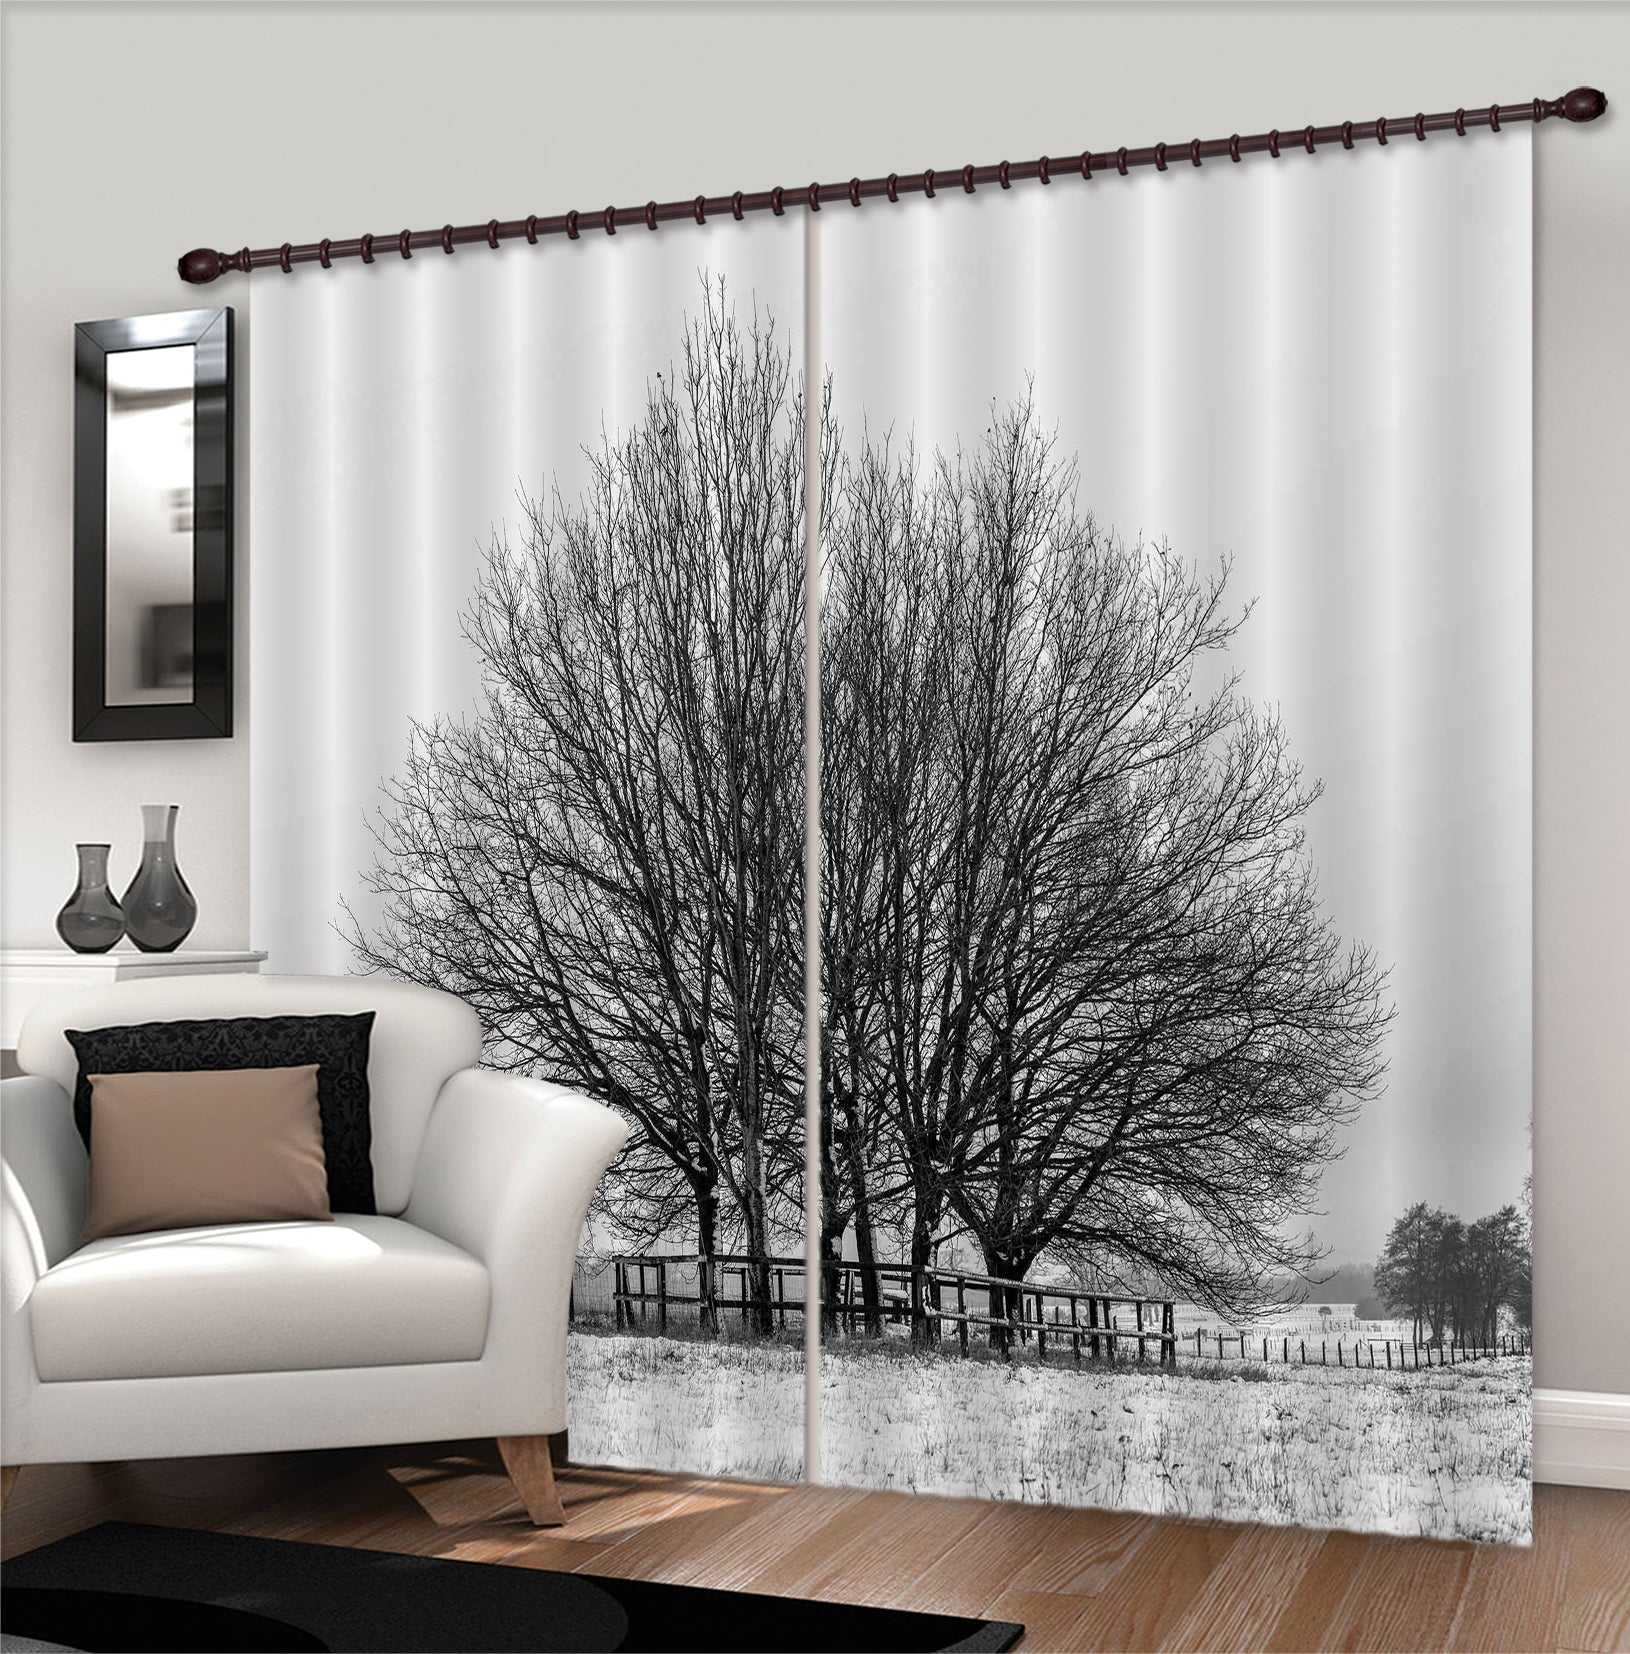 3D Black Tree 052 Assaf Frank Curtain Curtains Drapes